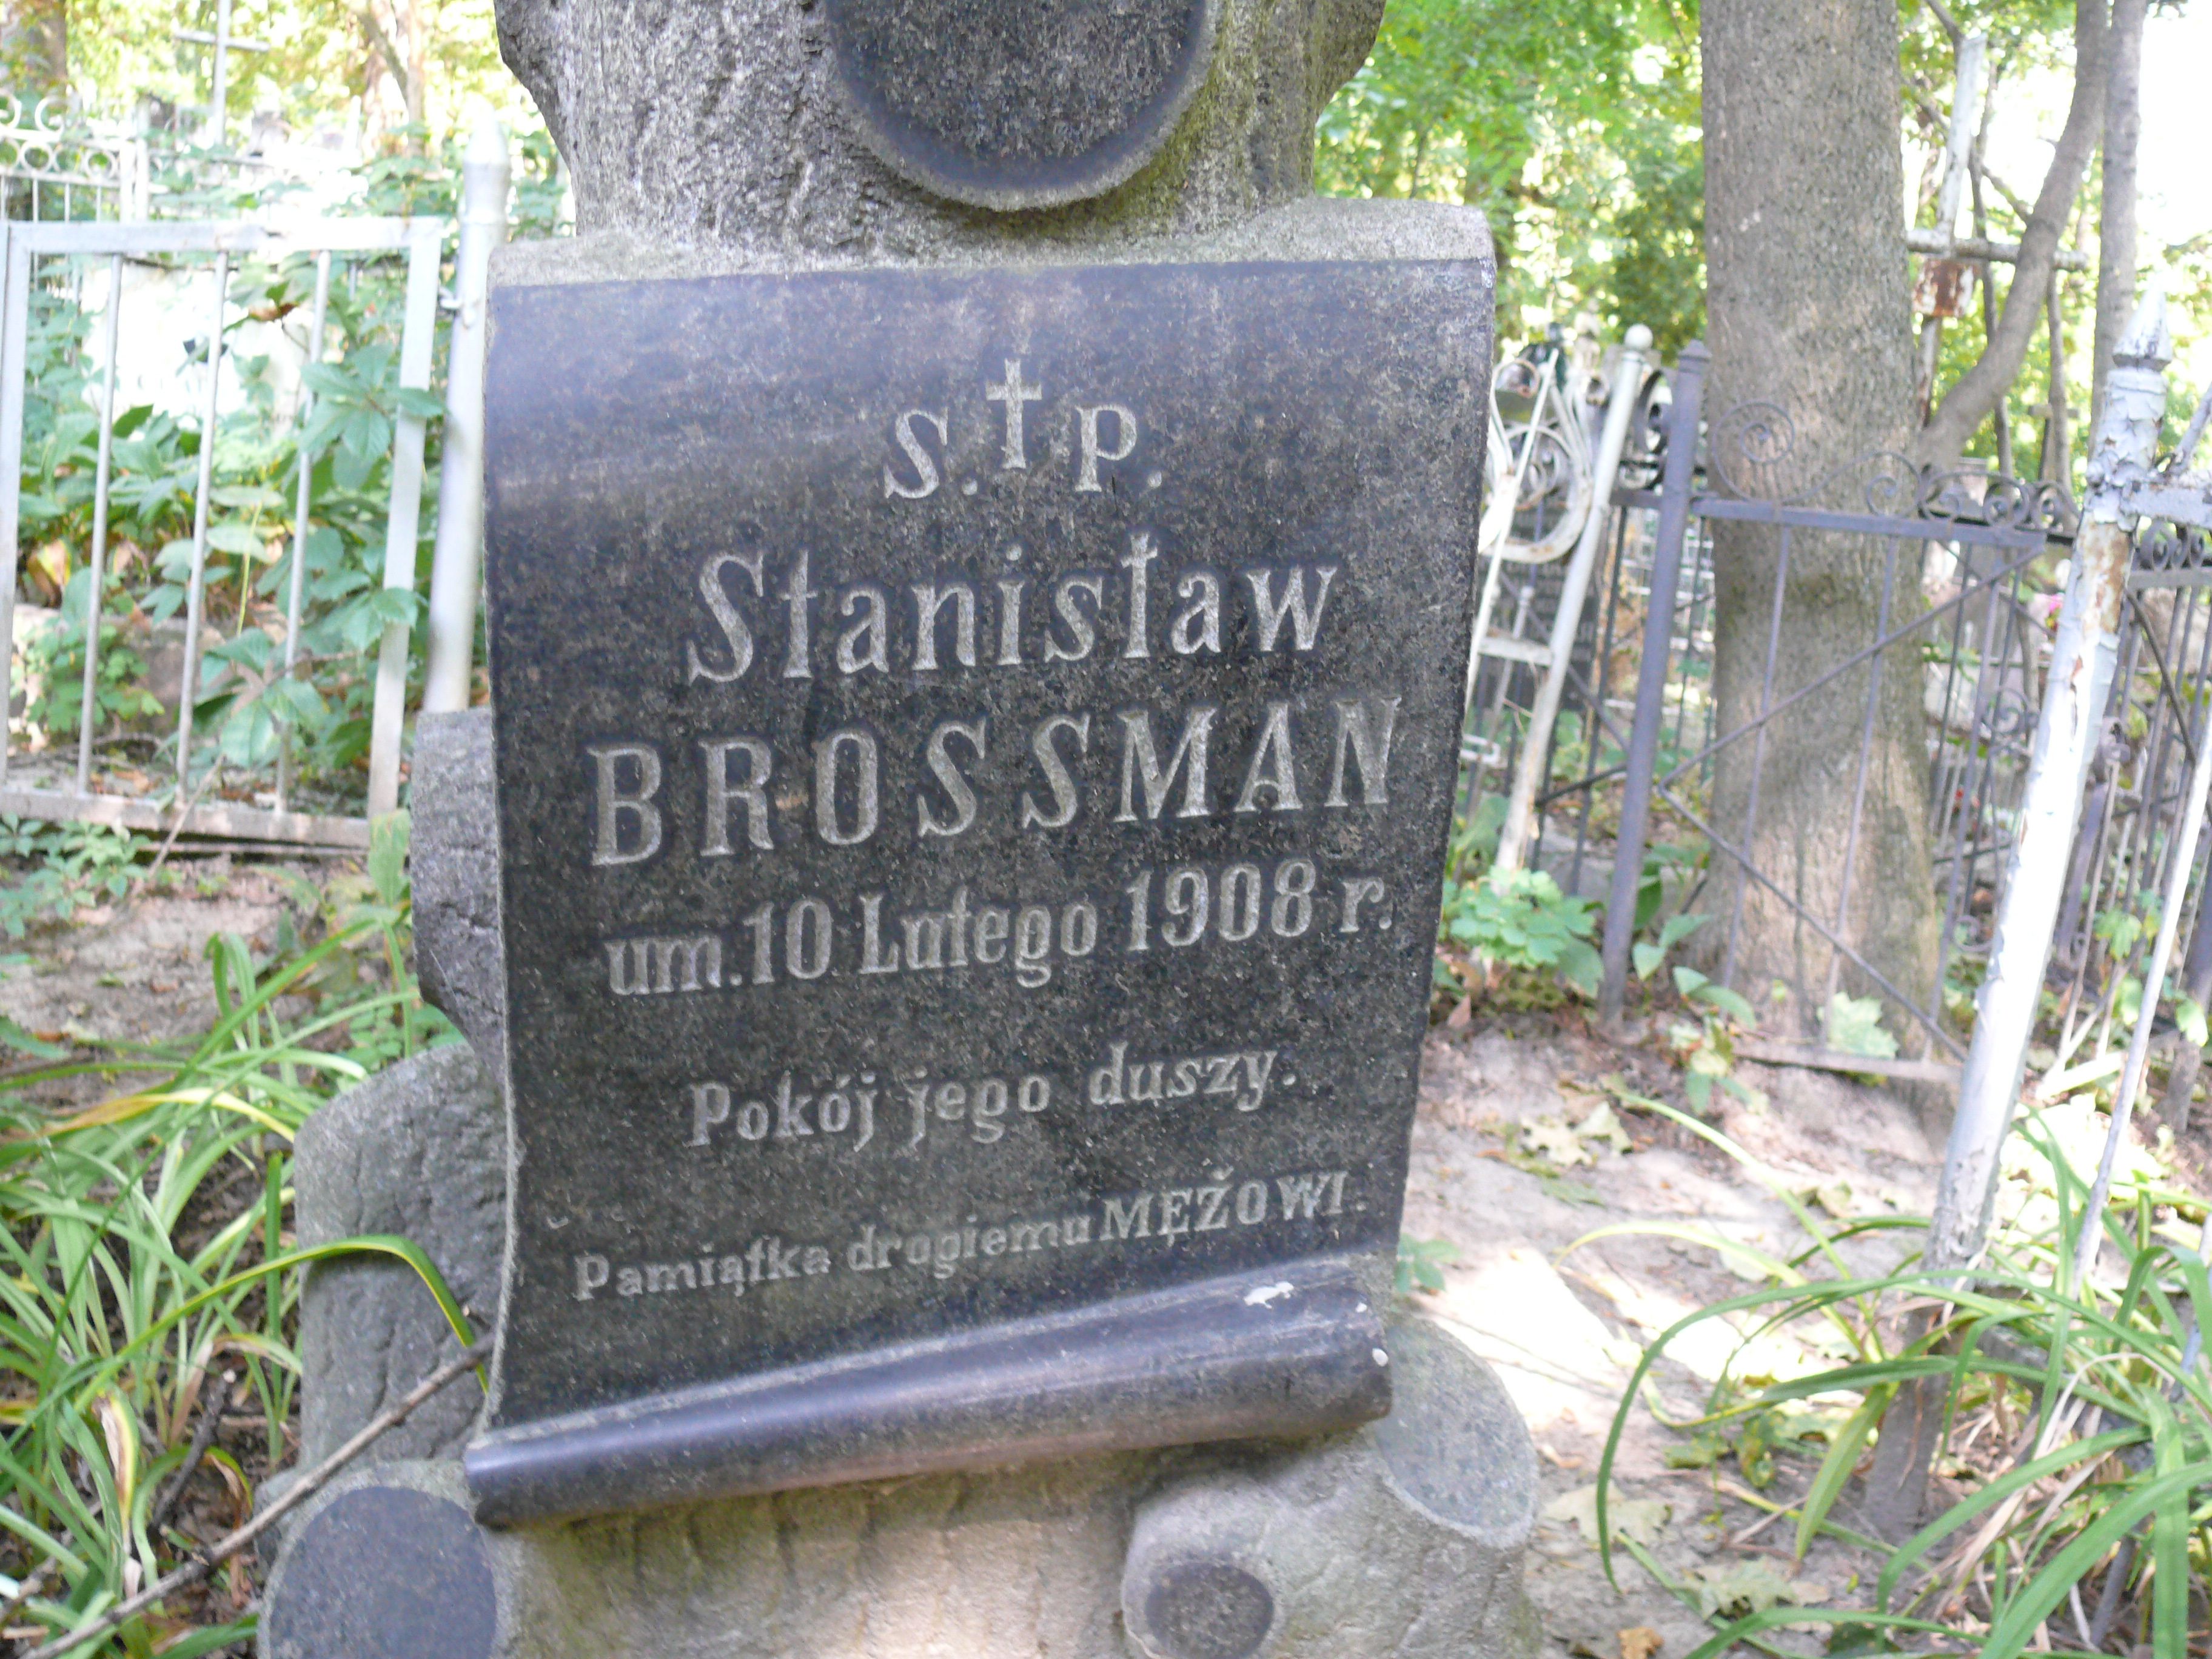 Inscription from the gravestone of Stanislaw Brossman